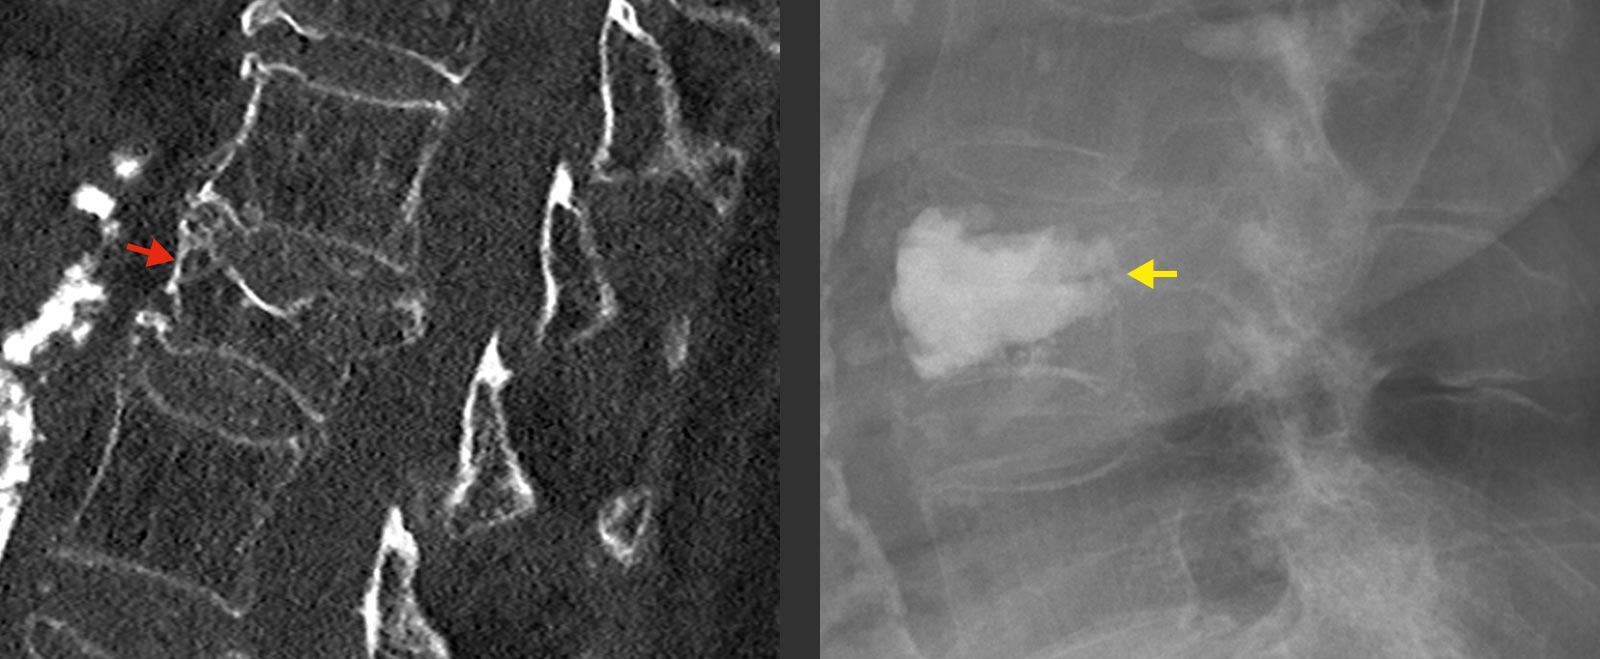 2 CT images. Left lumbar vertebra fracture, right postoperative with cement filling